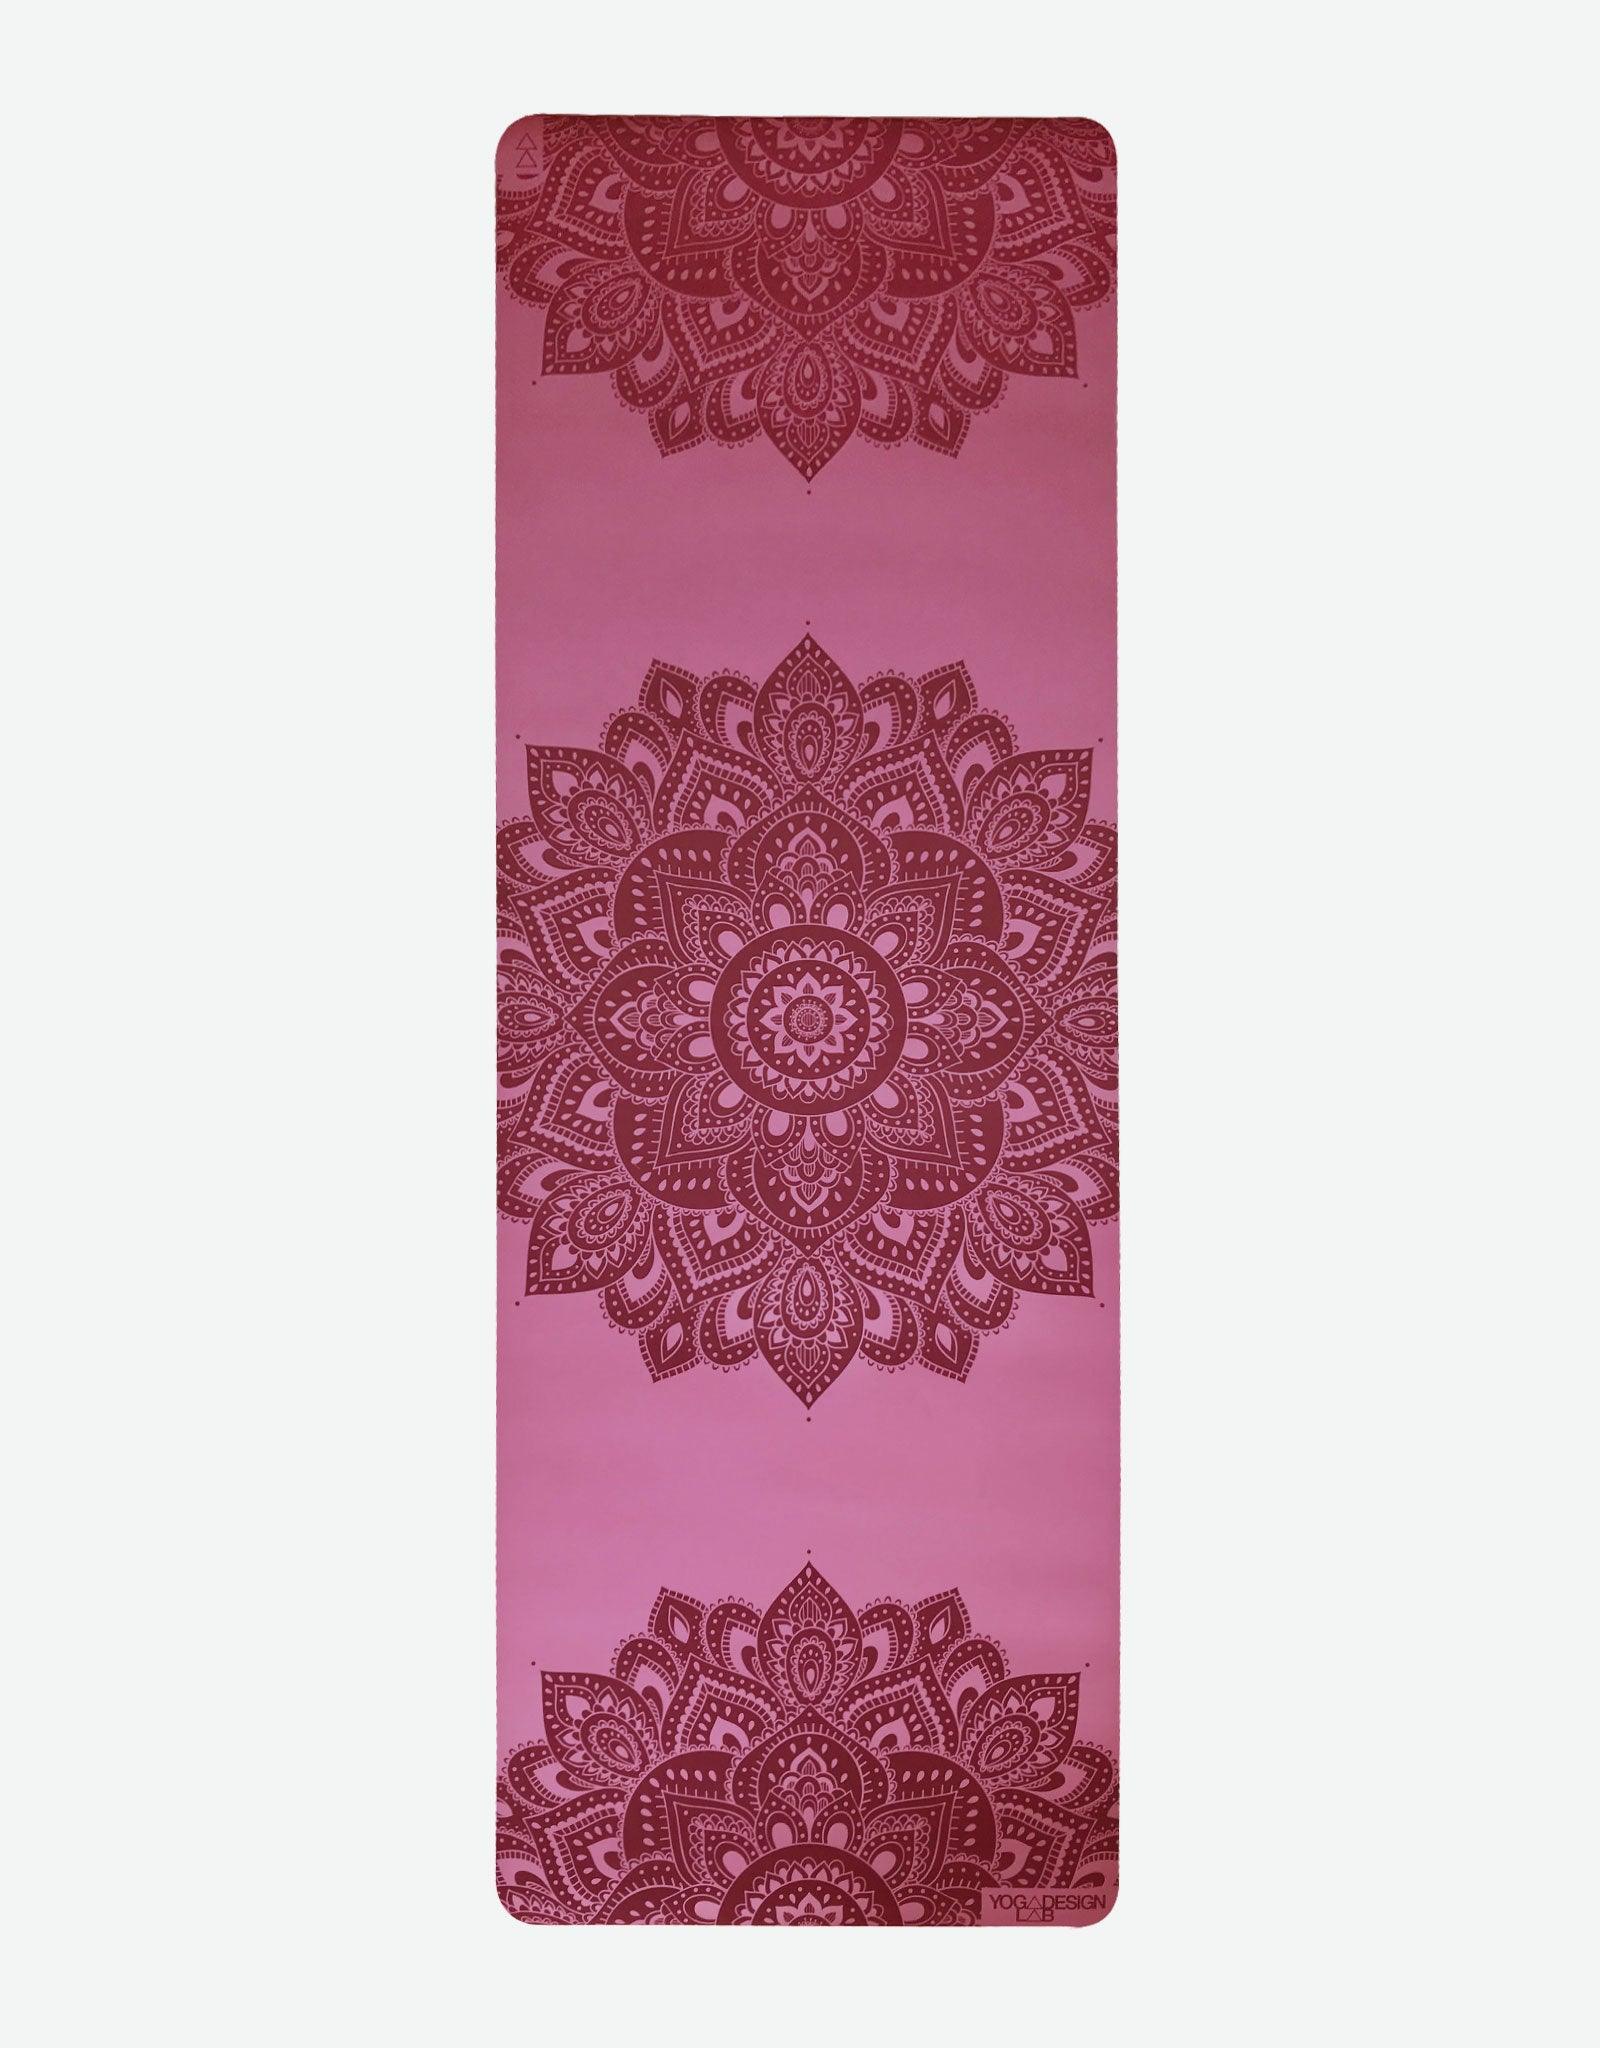 Infinity Yoga Mat - 5mm - Mandala Rose - The Best Yoga Mat provides great  support